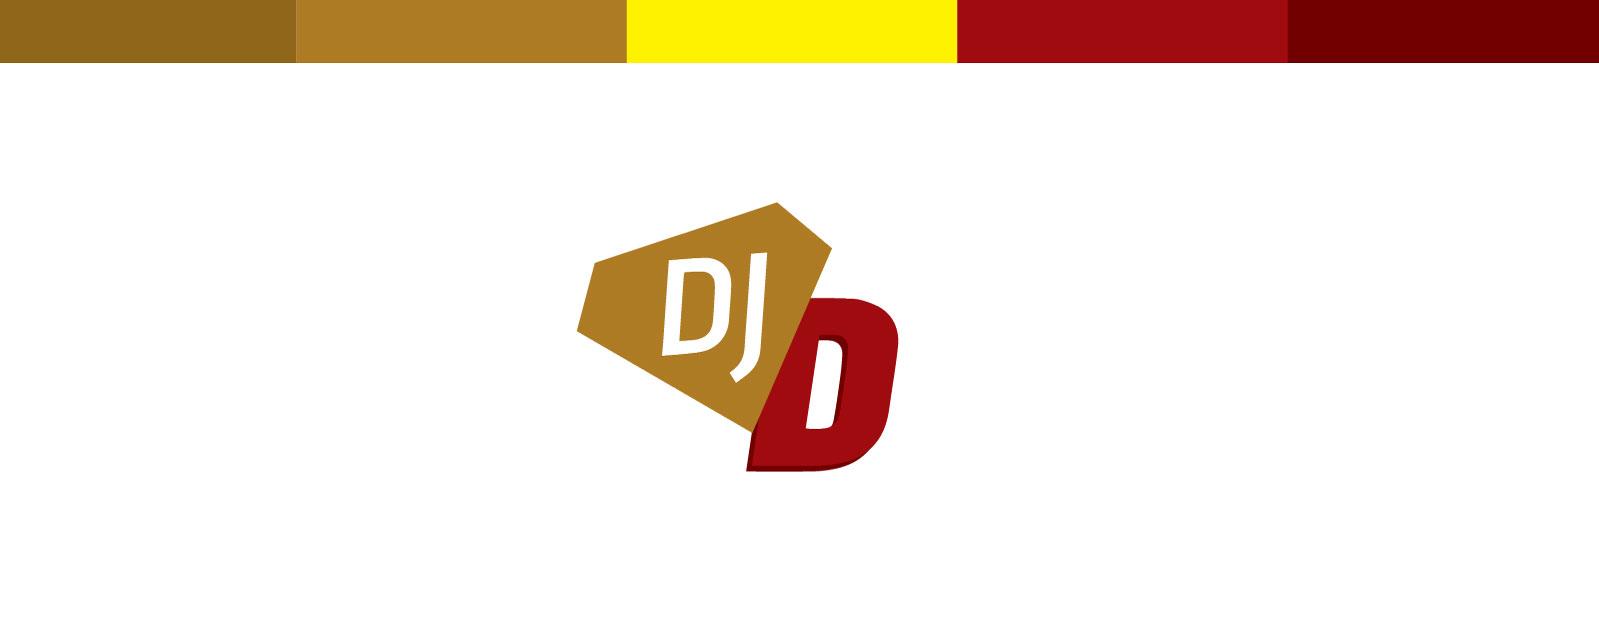 What's the 3 Diamond Logo - DJ Diamond Logo 3. Wit Design Kenya